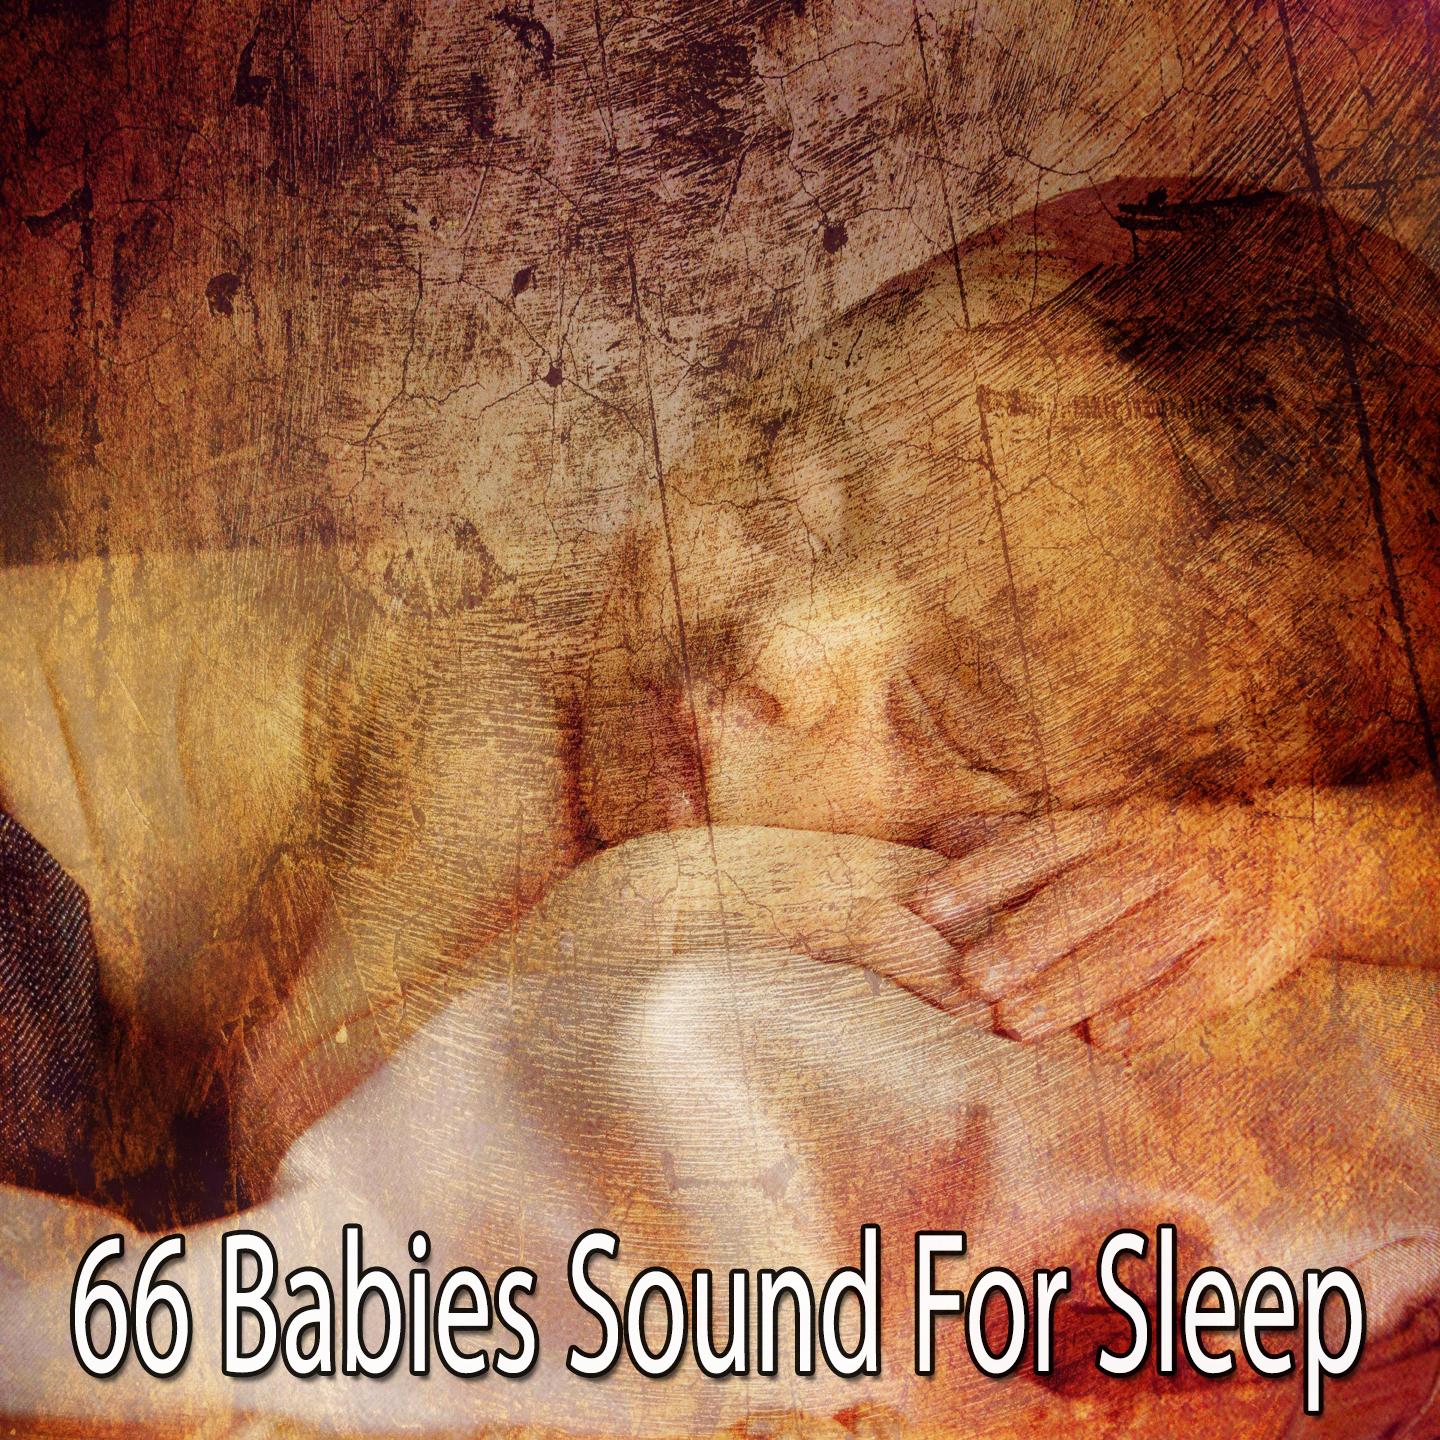 66 Babies Sound for Sleep